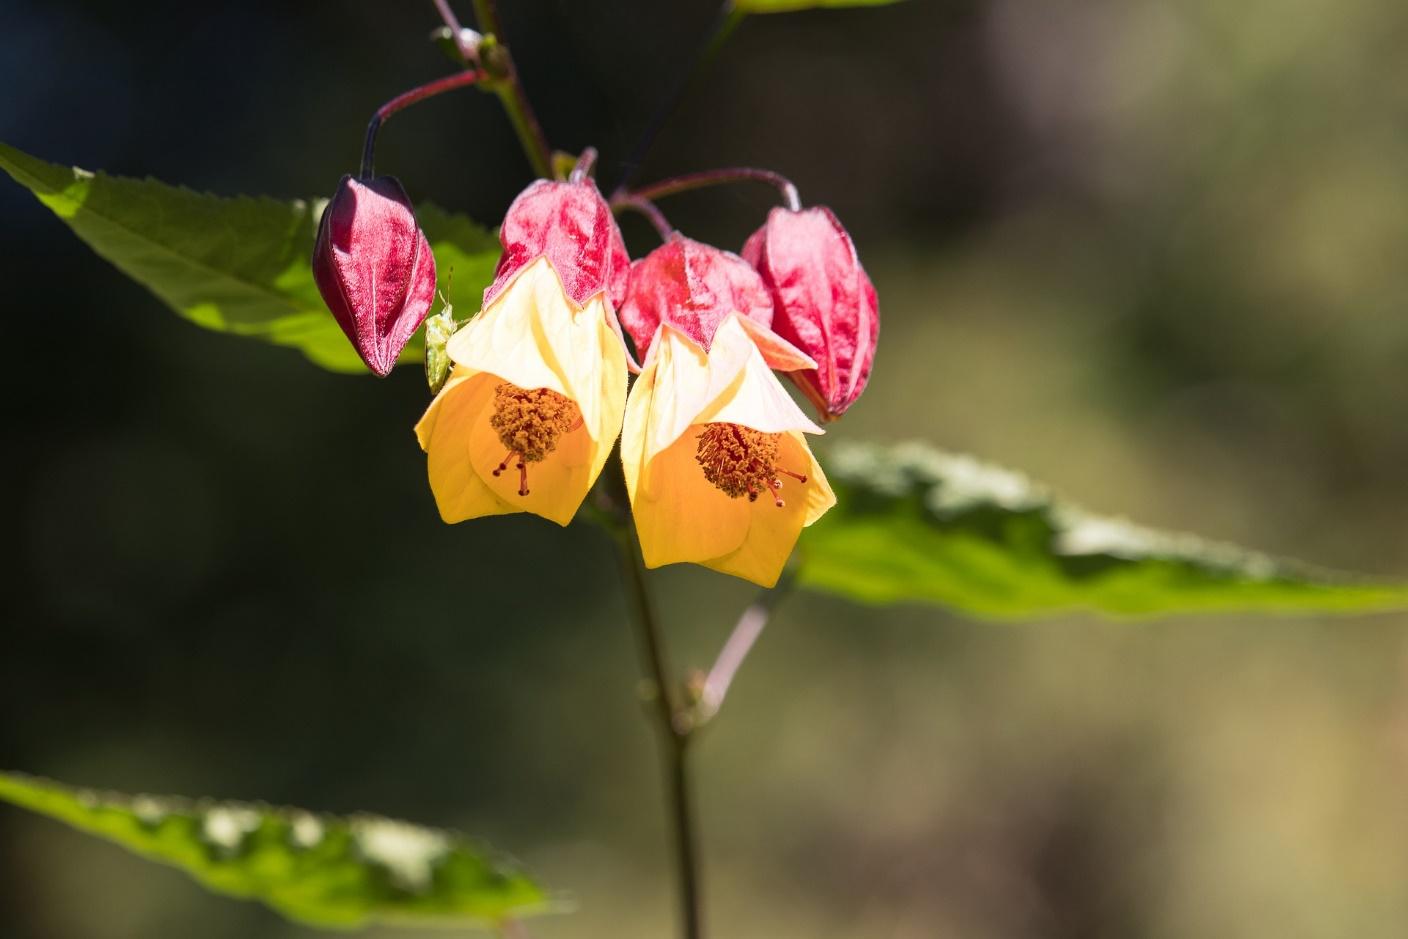 An Abutilon flower https://pixabay.com/photos/velvetleaf-flower-plant-blossom-3725170/